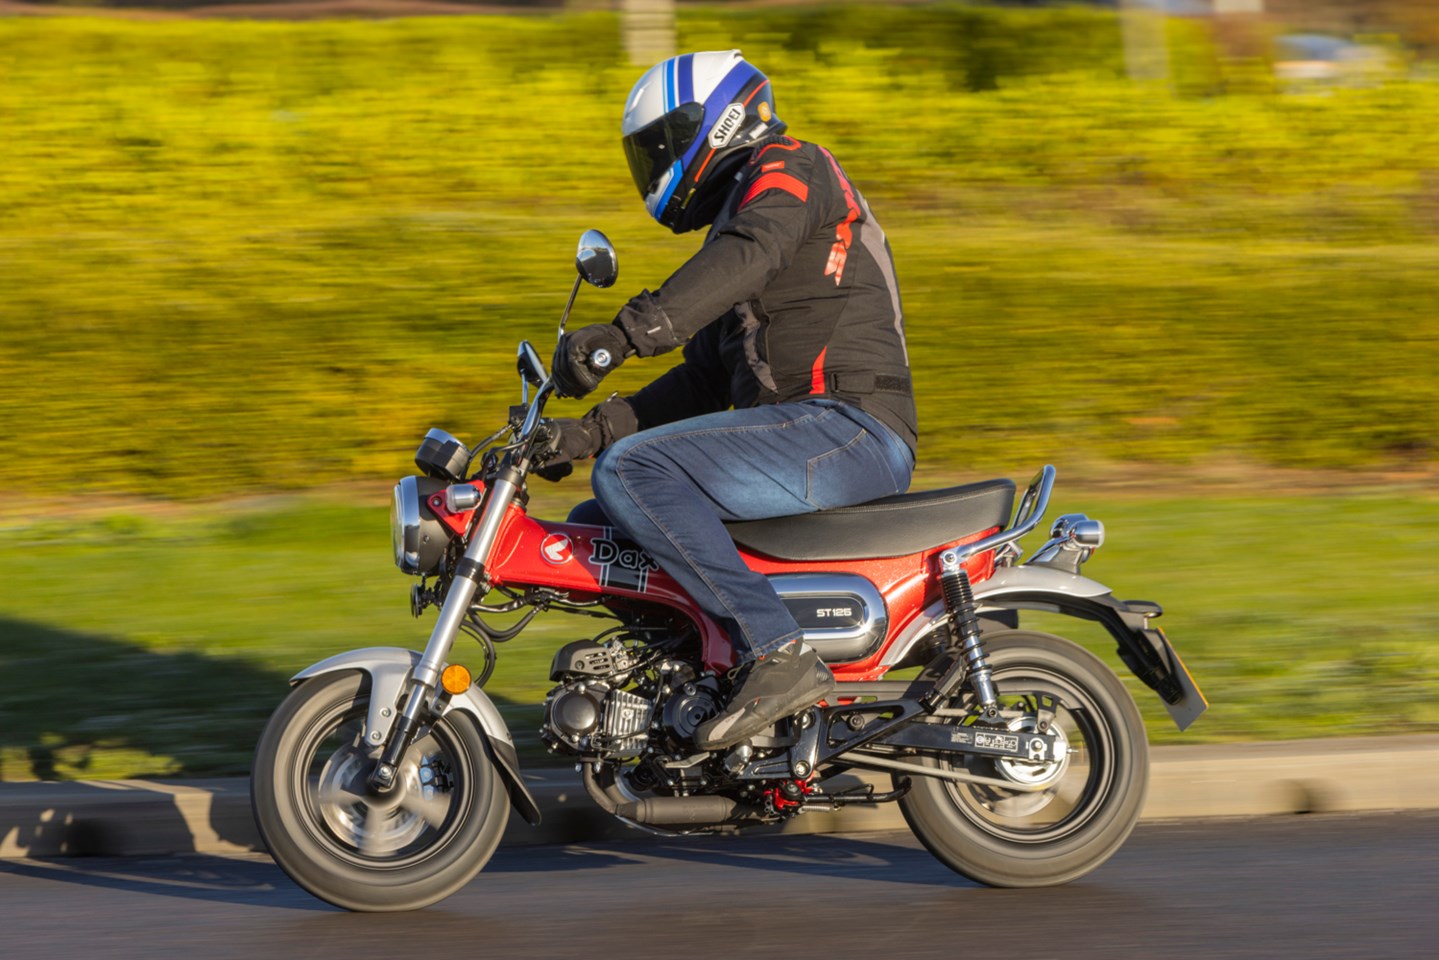 Reviewed: Honda ST125 Dax